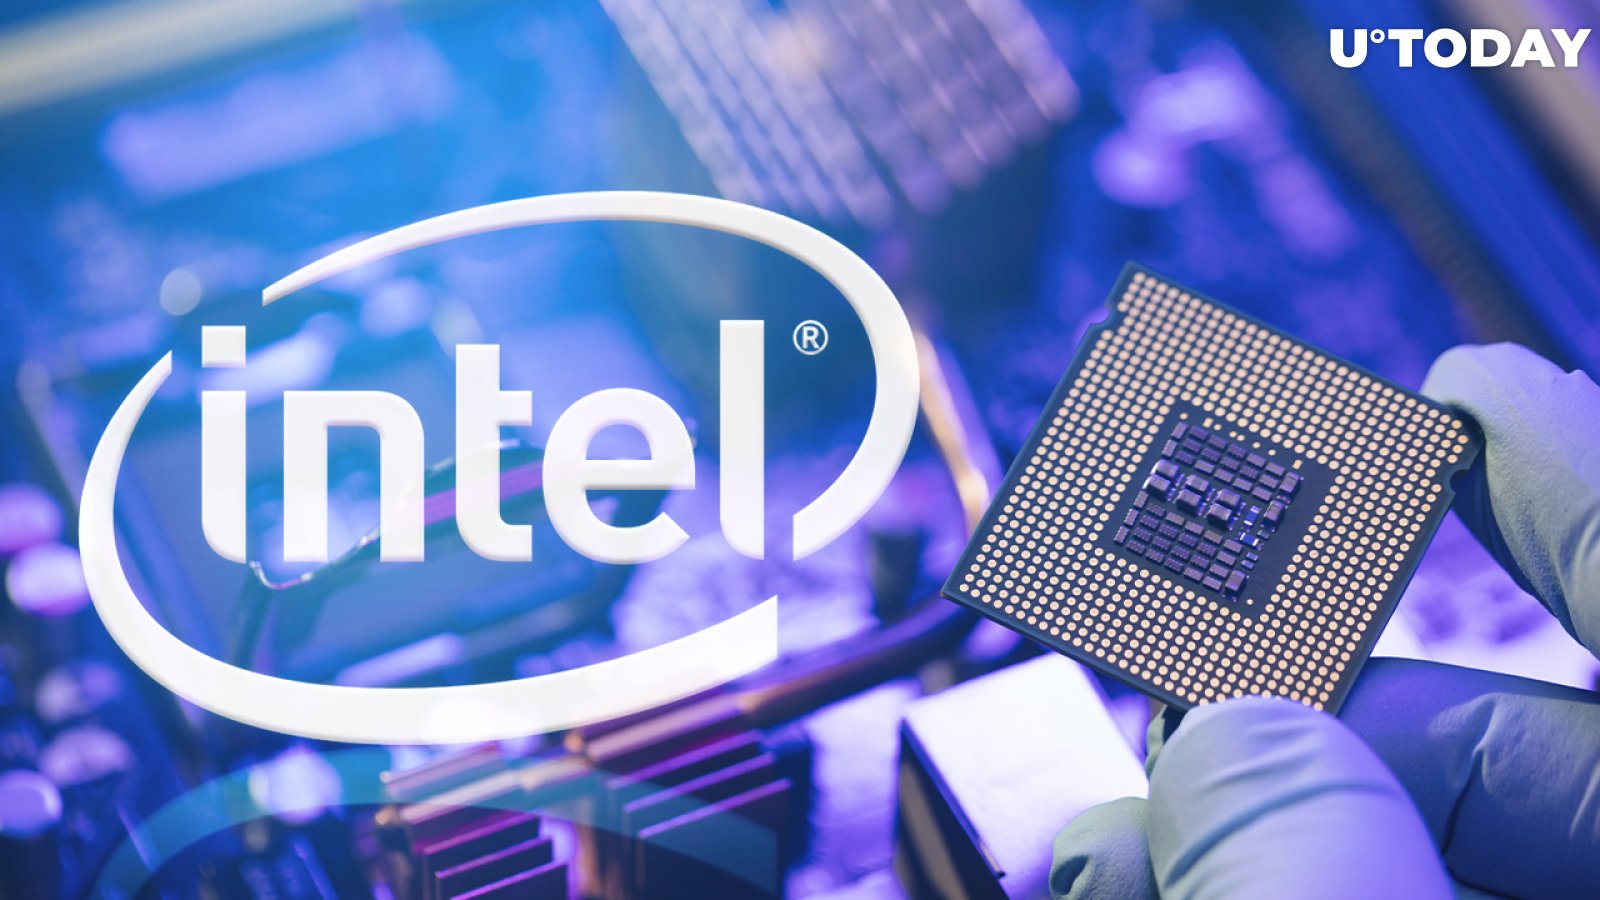 HIVE Blockchain Buys Intel’s Bitcoin Mining Chips